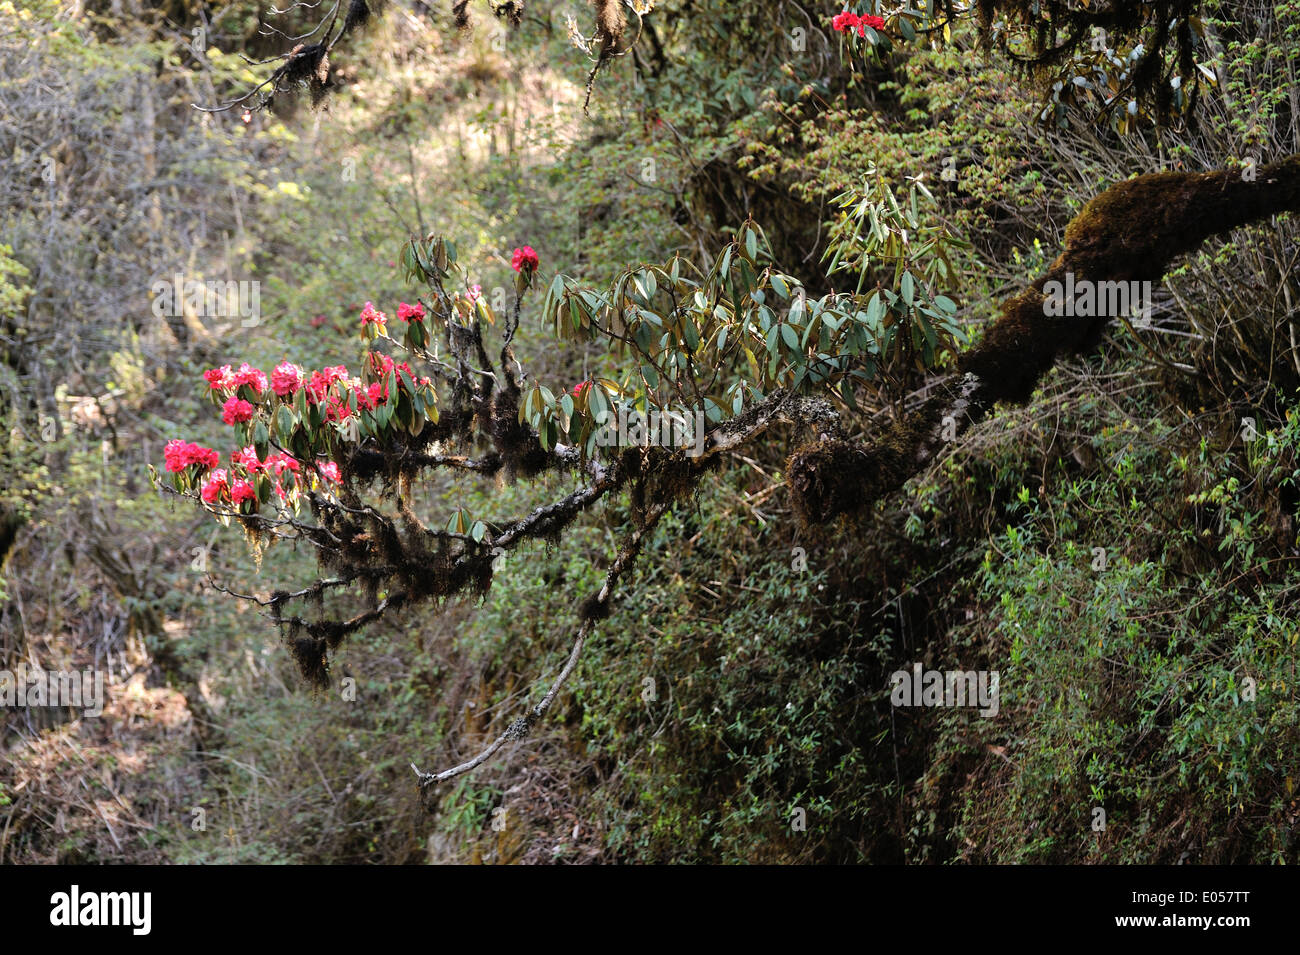 Himalayan forest vegetation in Eastern Bhutan. Image taken on Merak Sakteng trek. Stock Photo